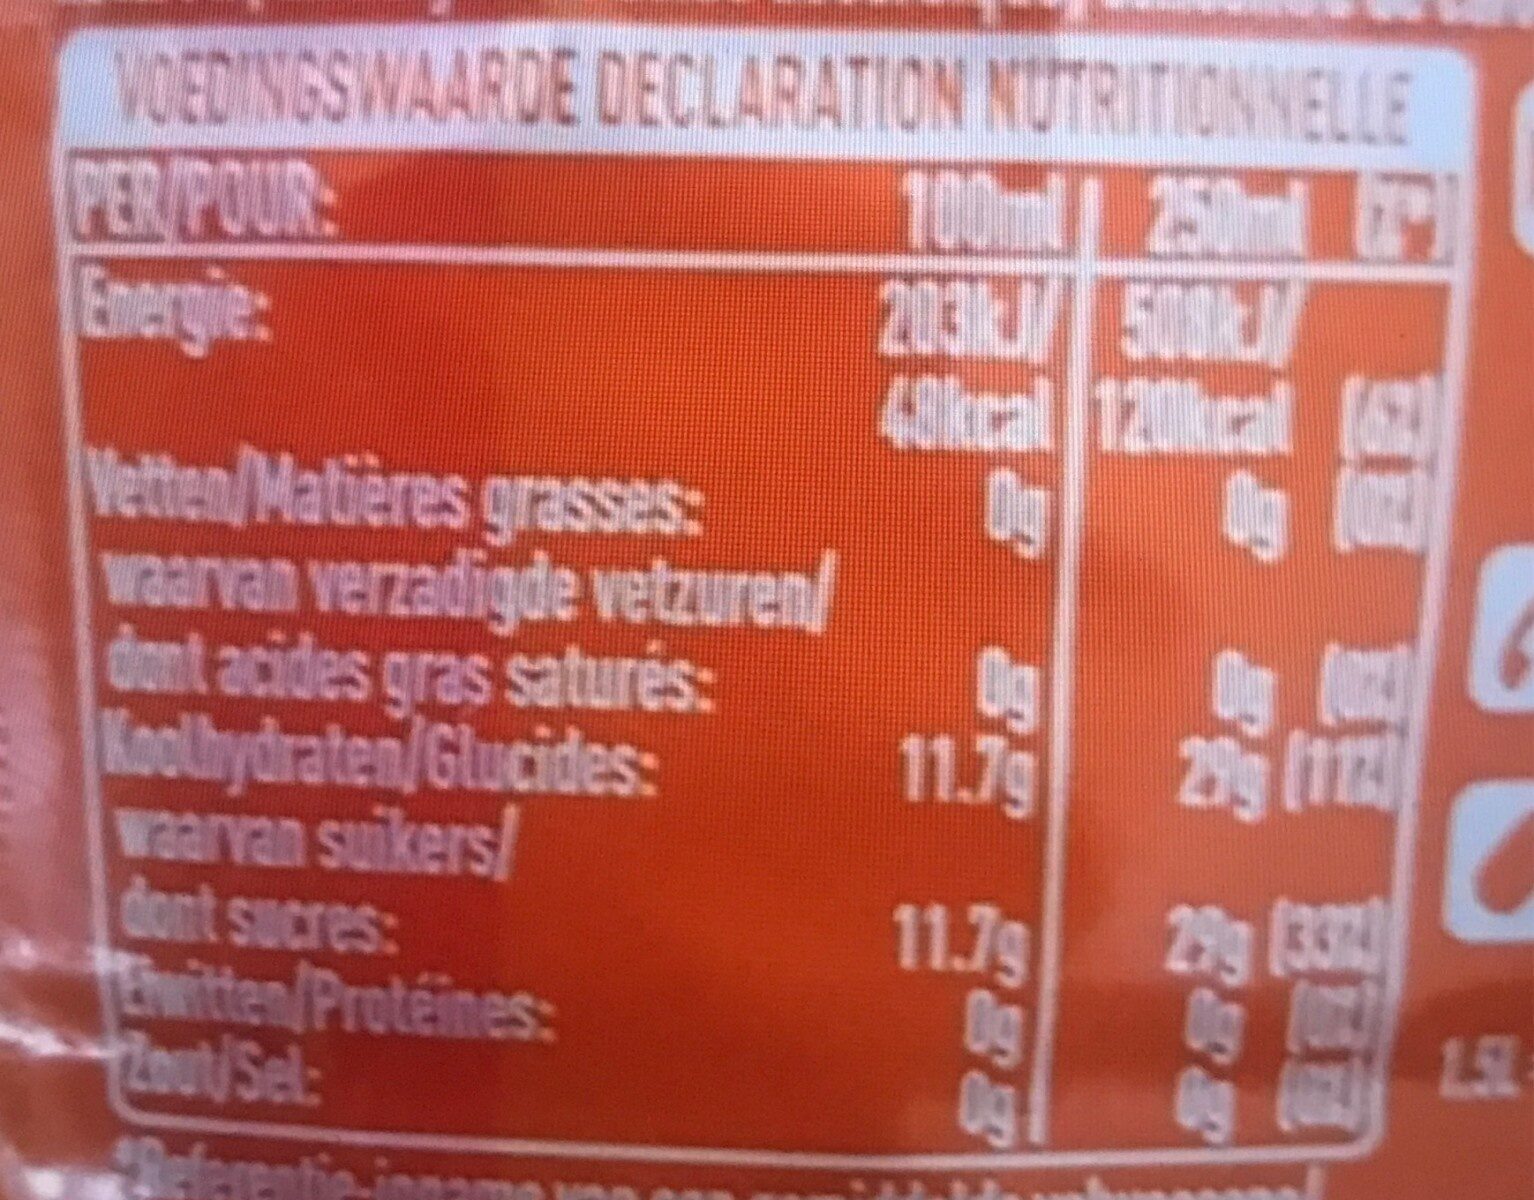 Fanta orange 1.5l - Valori nutrizionali - fr